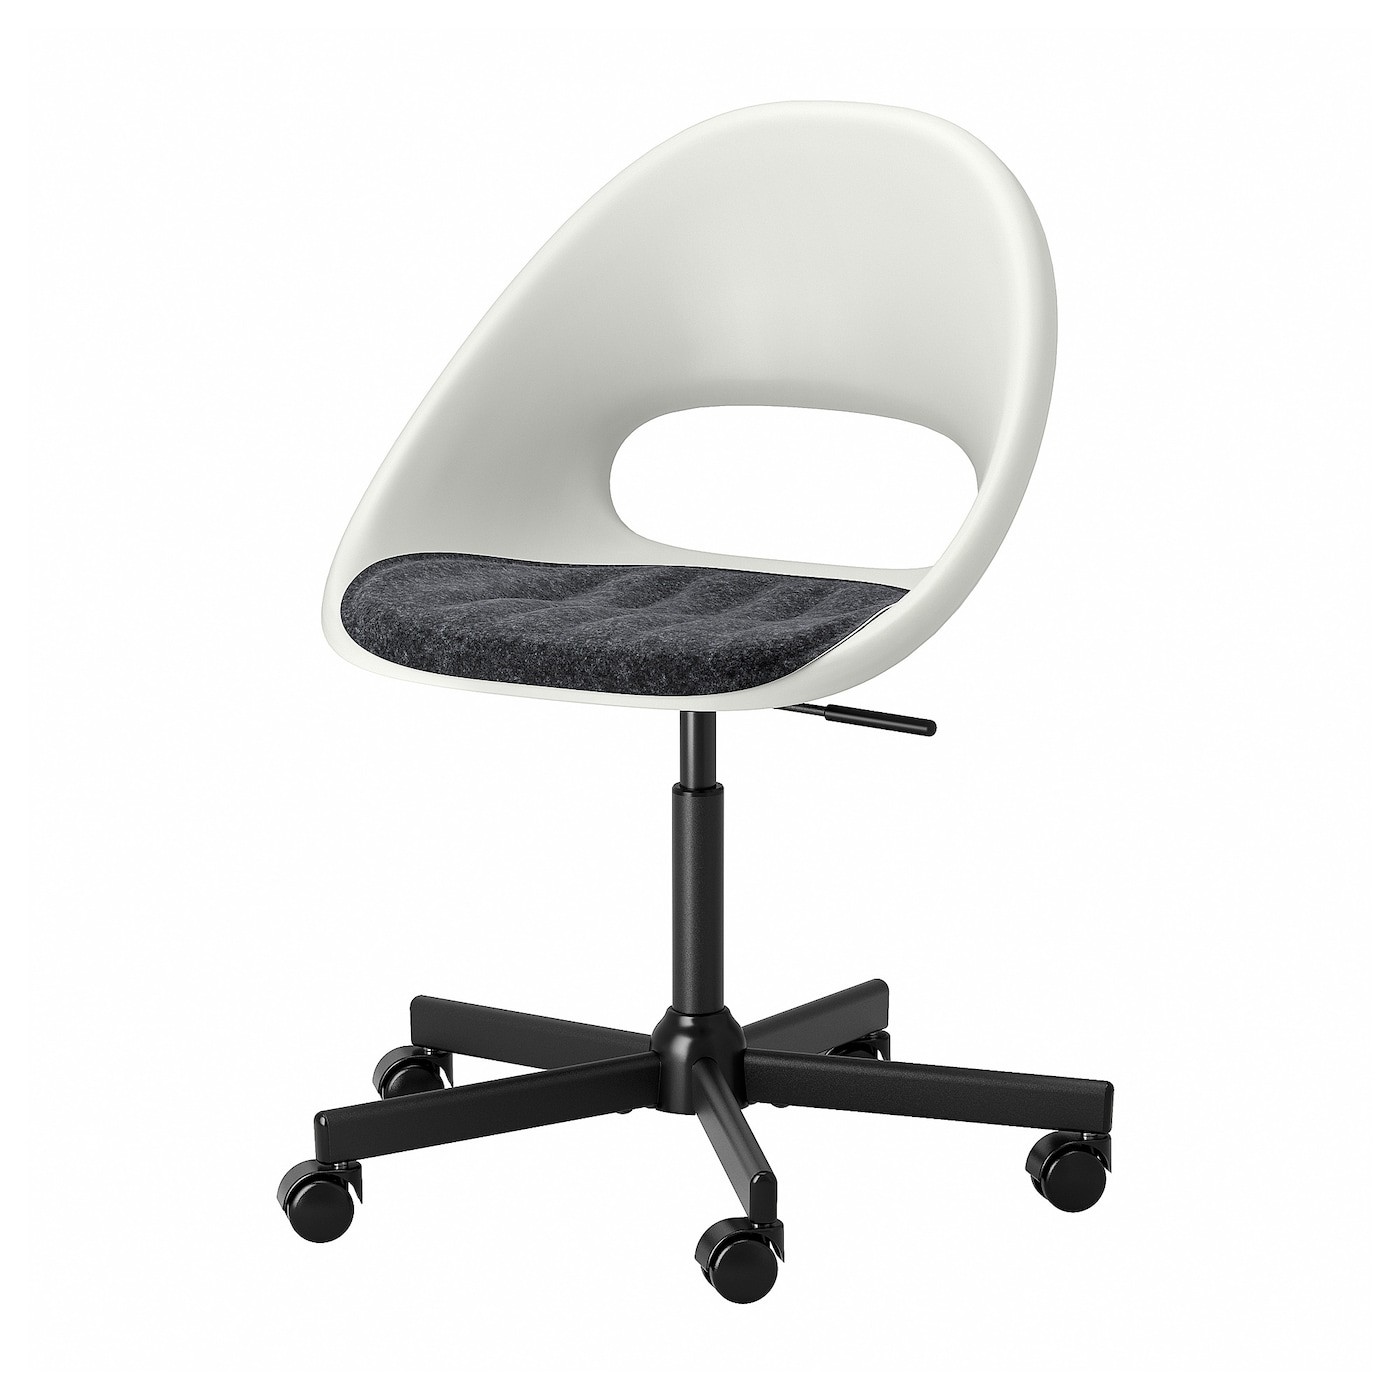 LOBERGET / MALSKÄR Swivel chair with pad